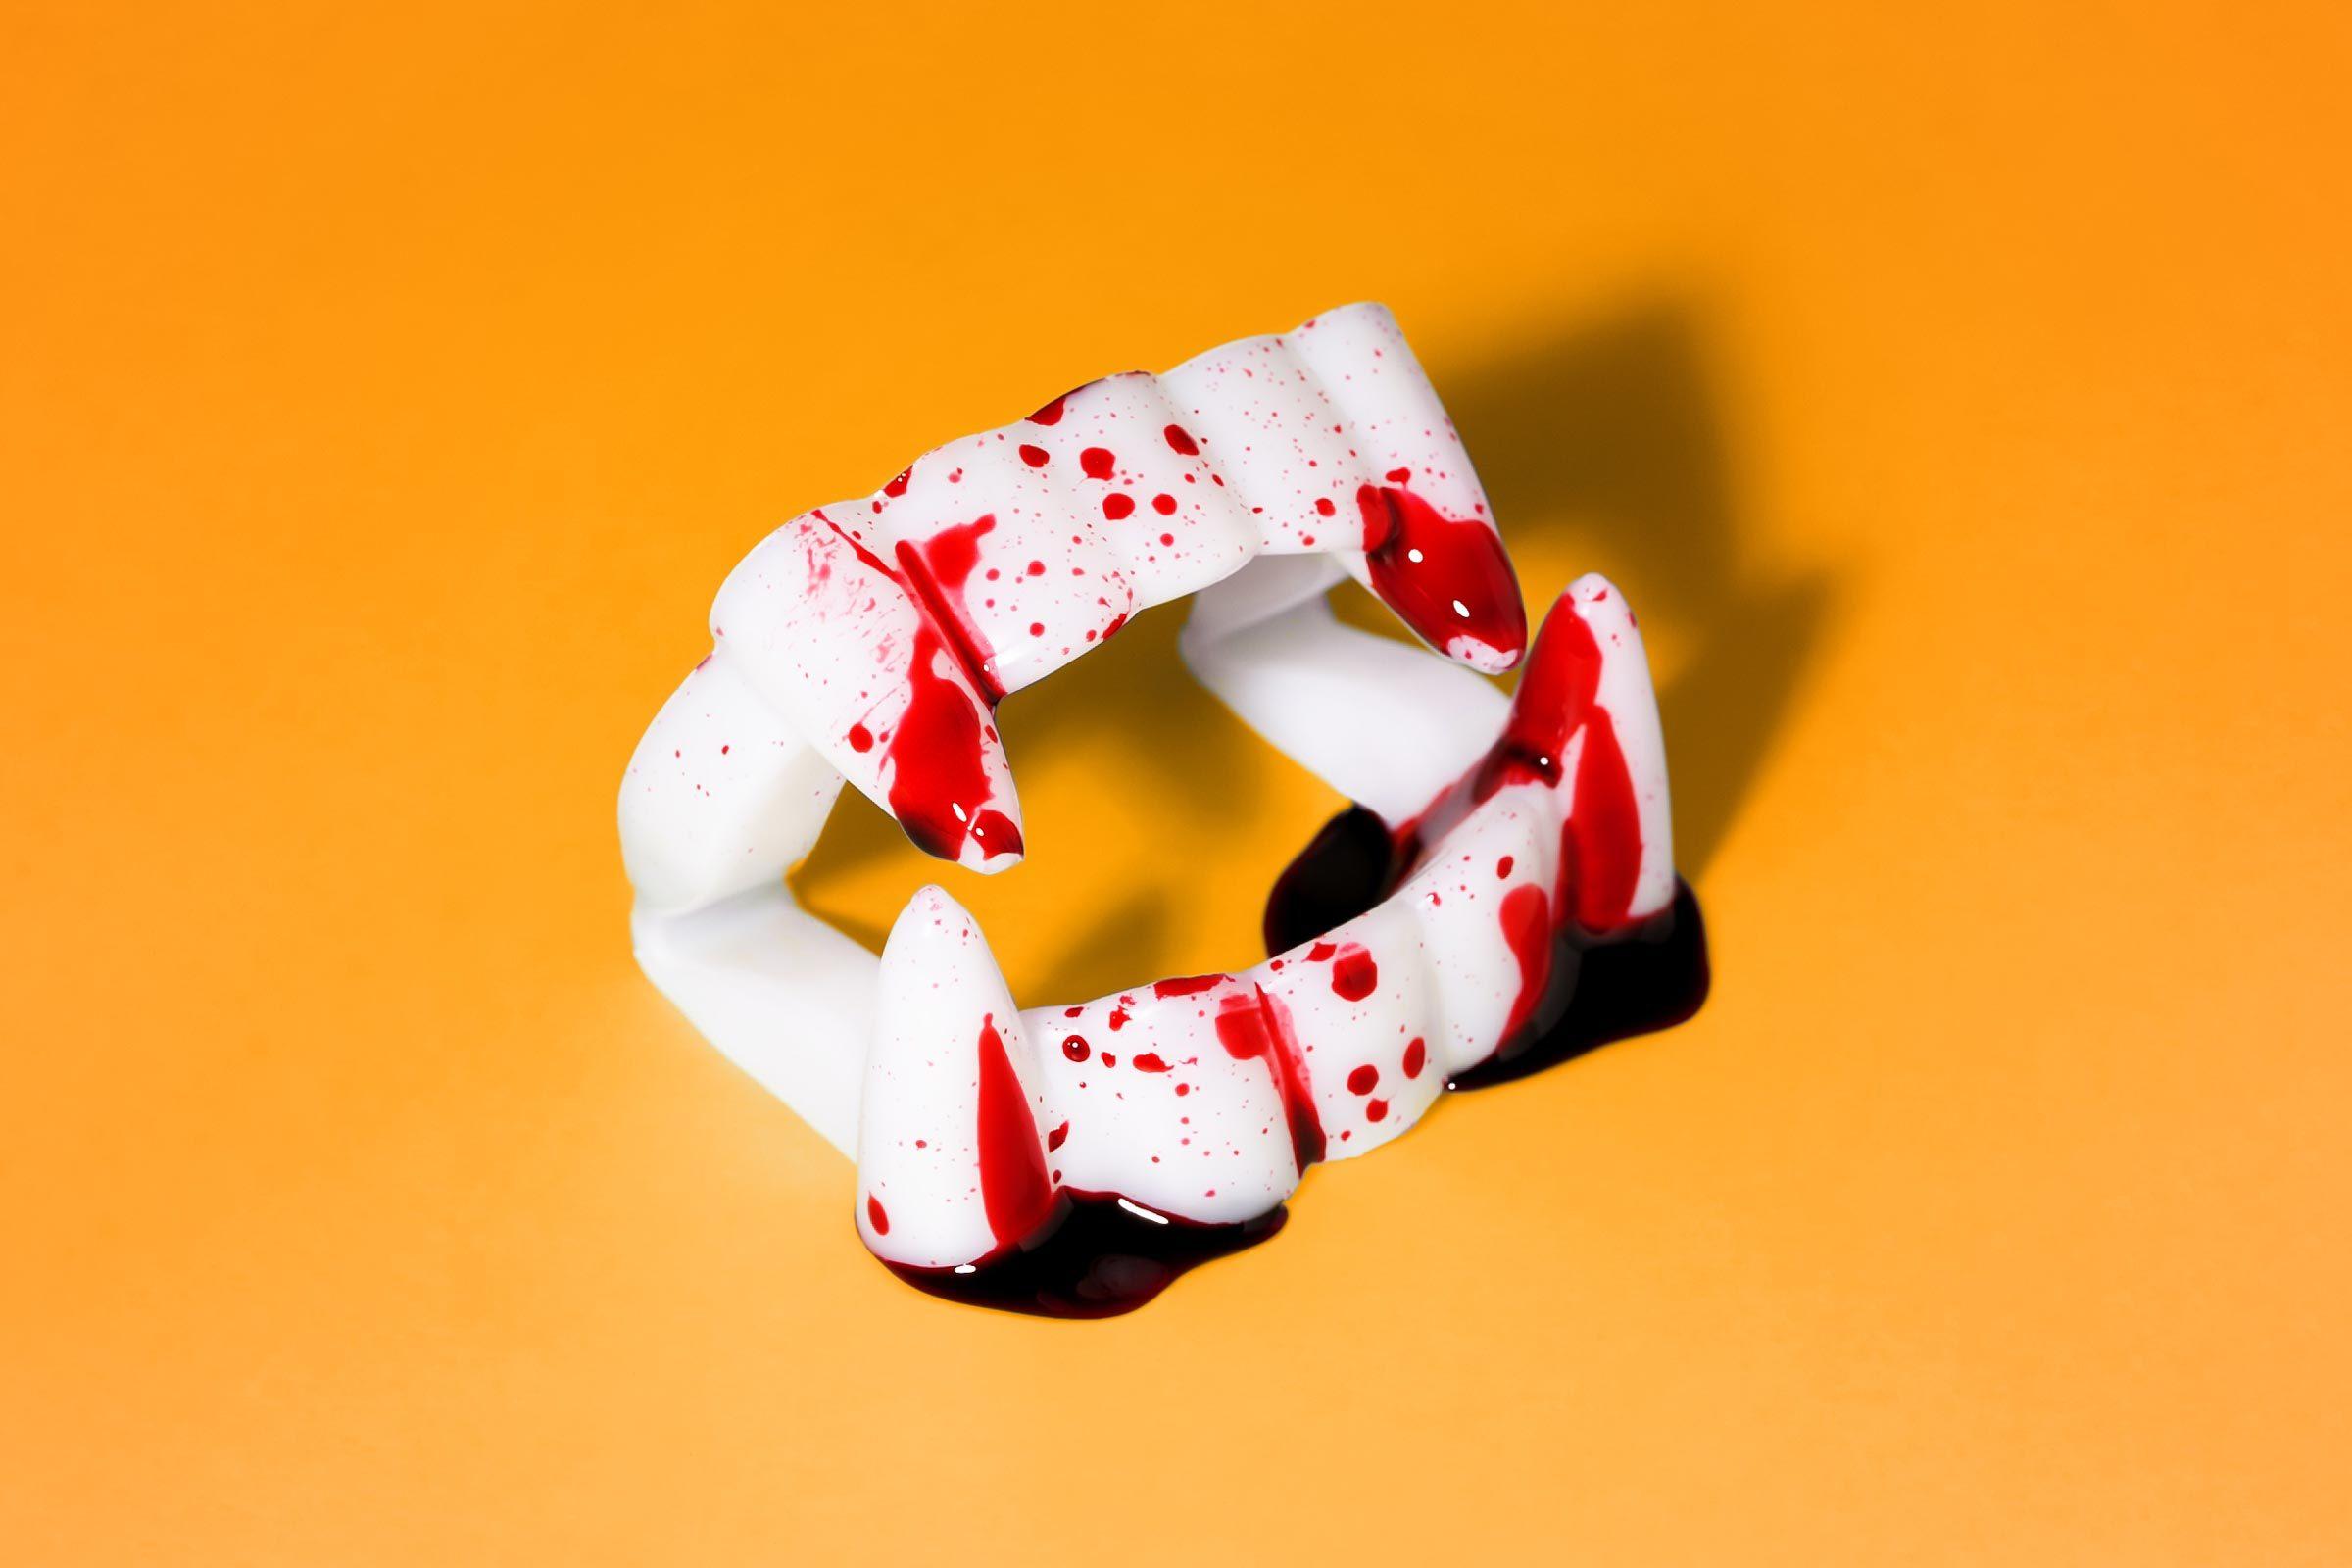 How to Make Fake Blood for Halloween: 3 Creepy Ways